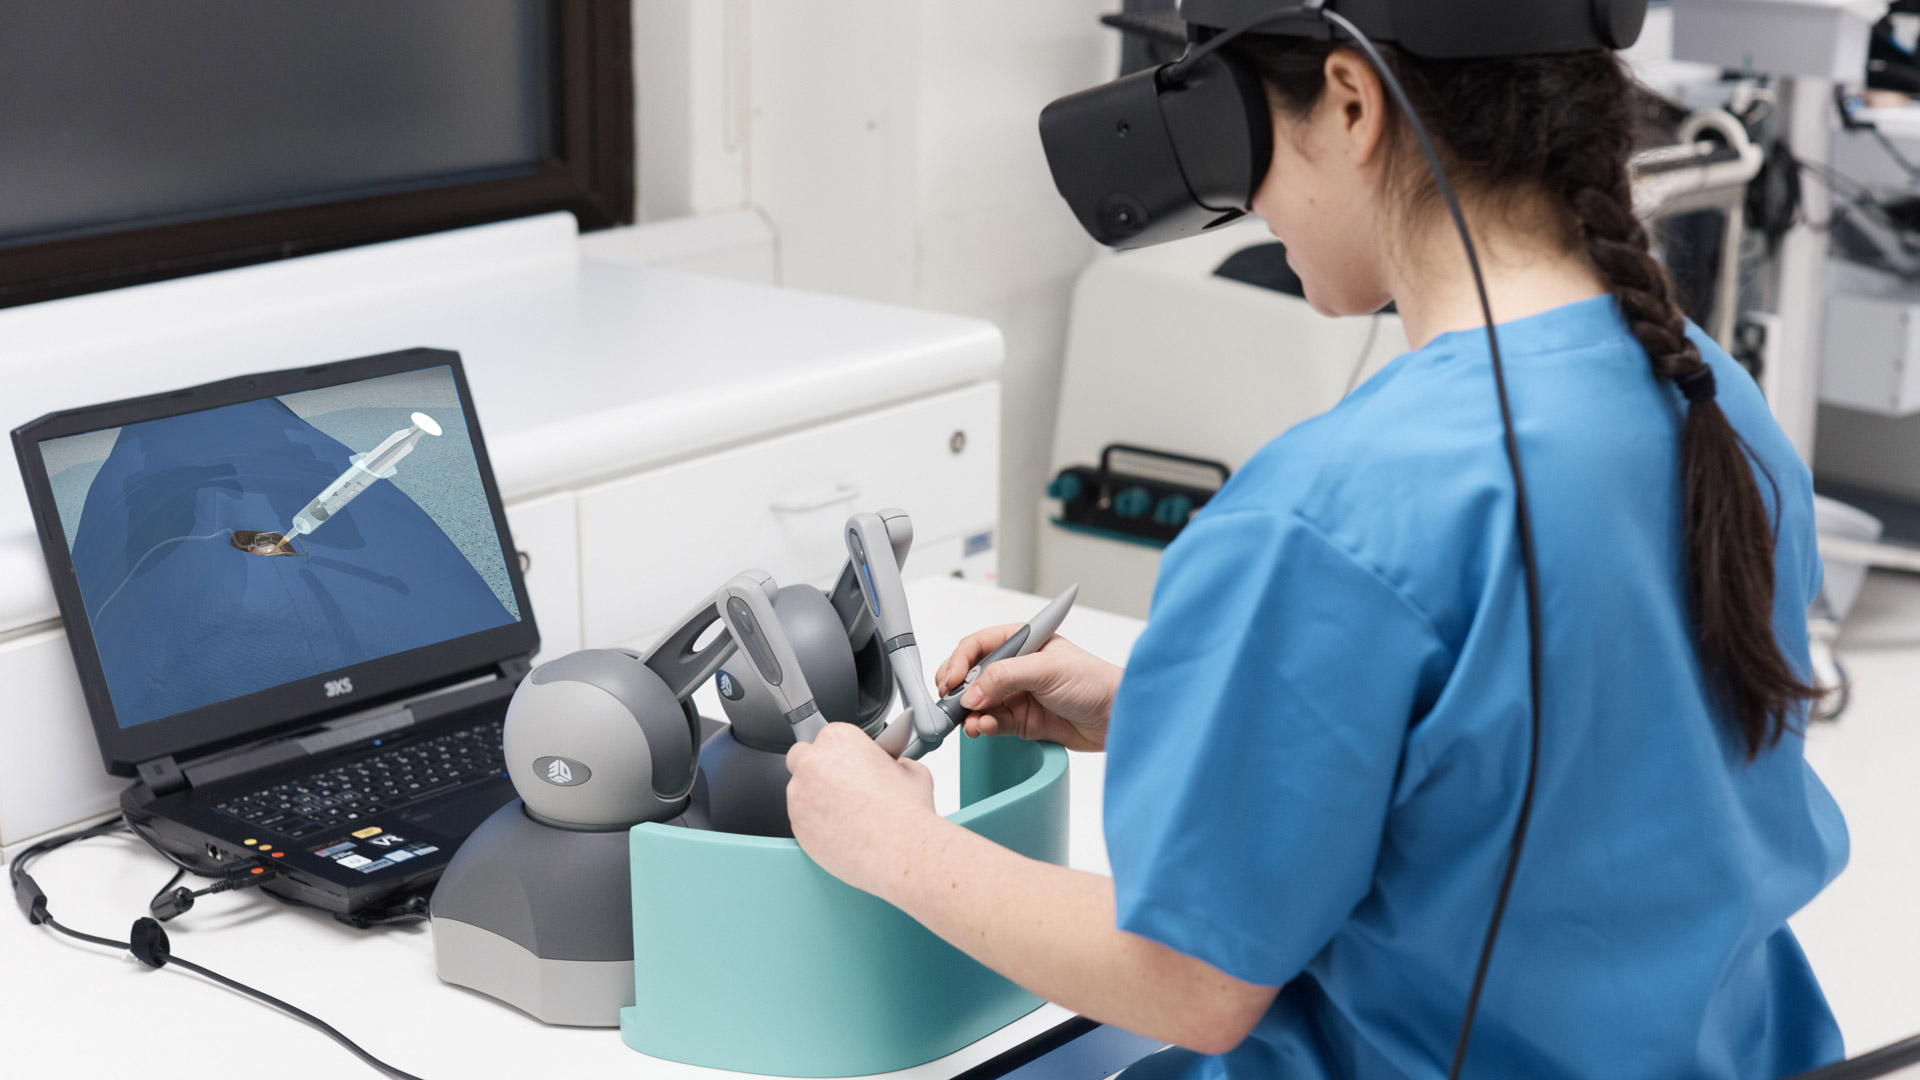 VR Surgical Training Platform FundamentalVR Raises $20M Investment